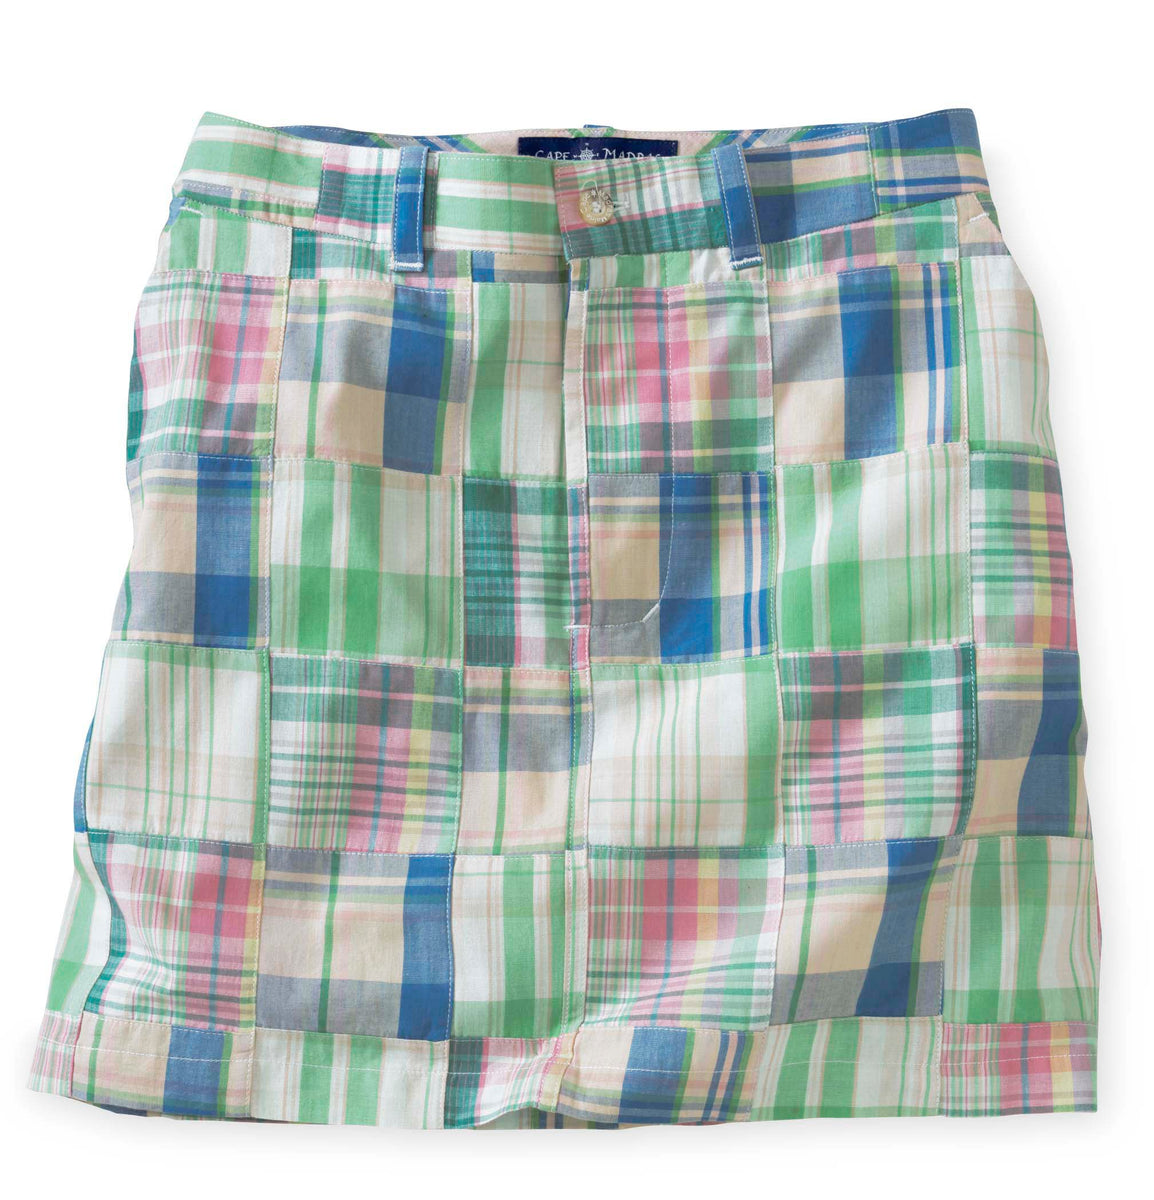 Women's Fun Skirt - Cape – Cape Madras